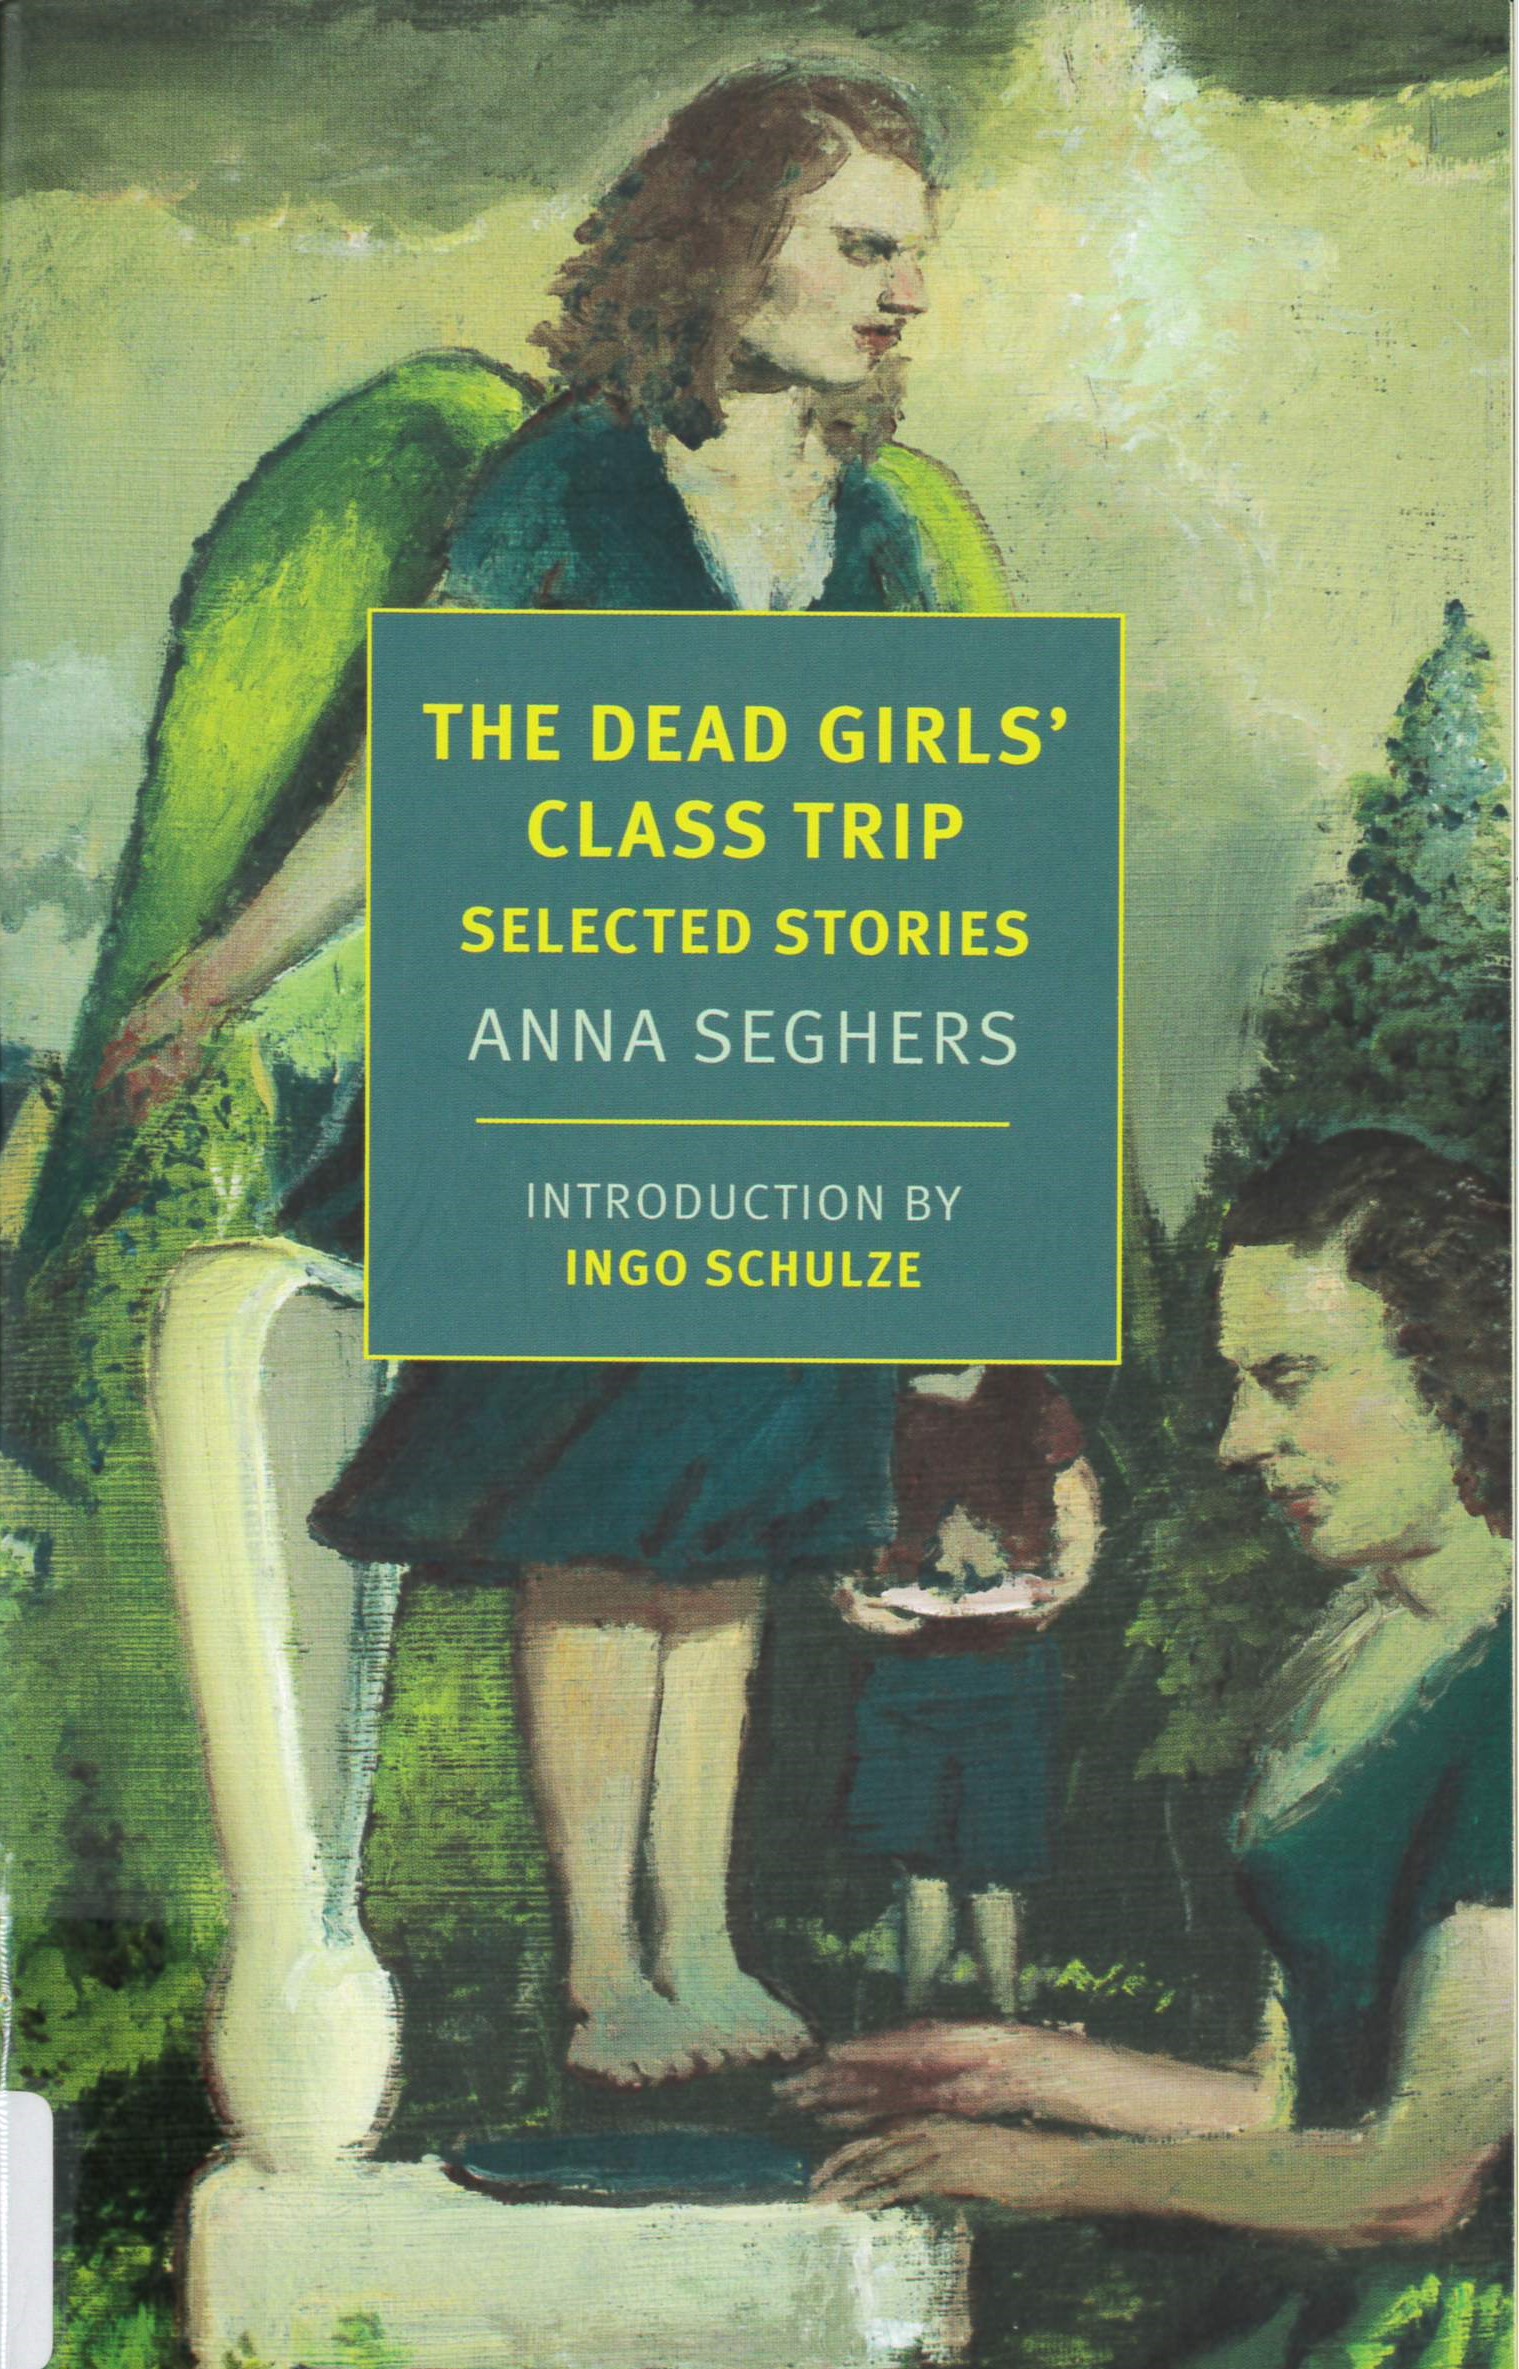 The dead girls